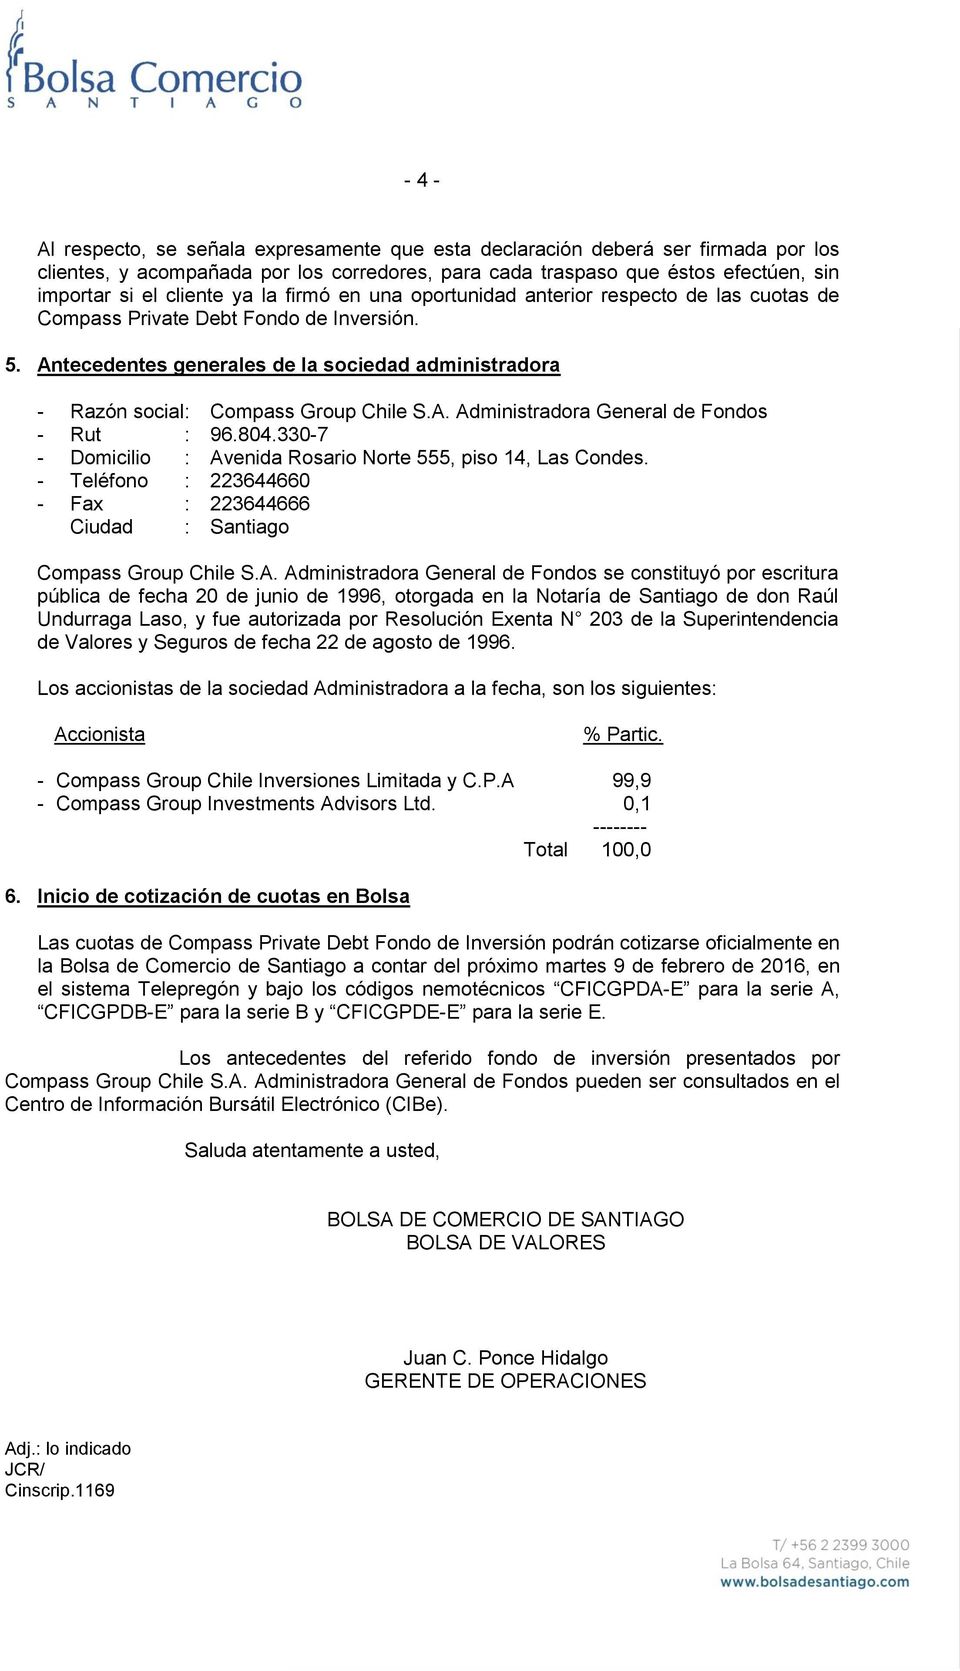 Antecedentes generales de la sociedad administradora - Razón social : Compass Group Chile S.A. Administradora General de Fondos - Rut : 96.804.